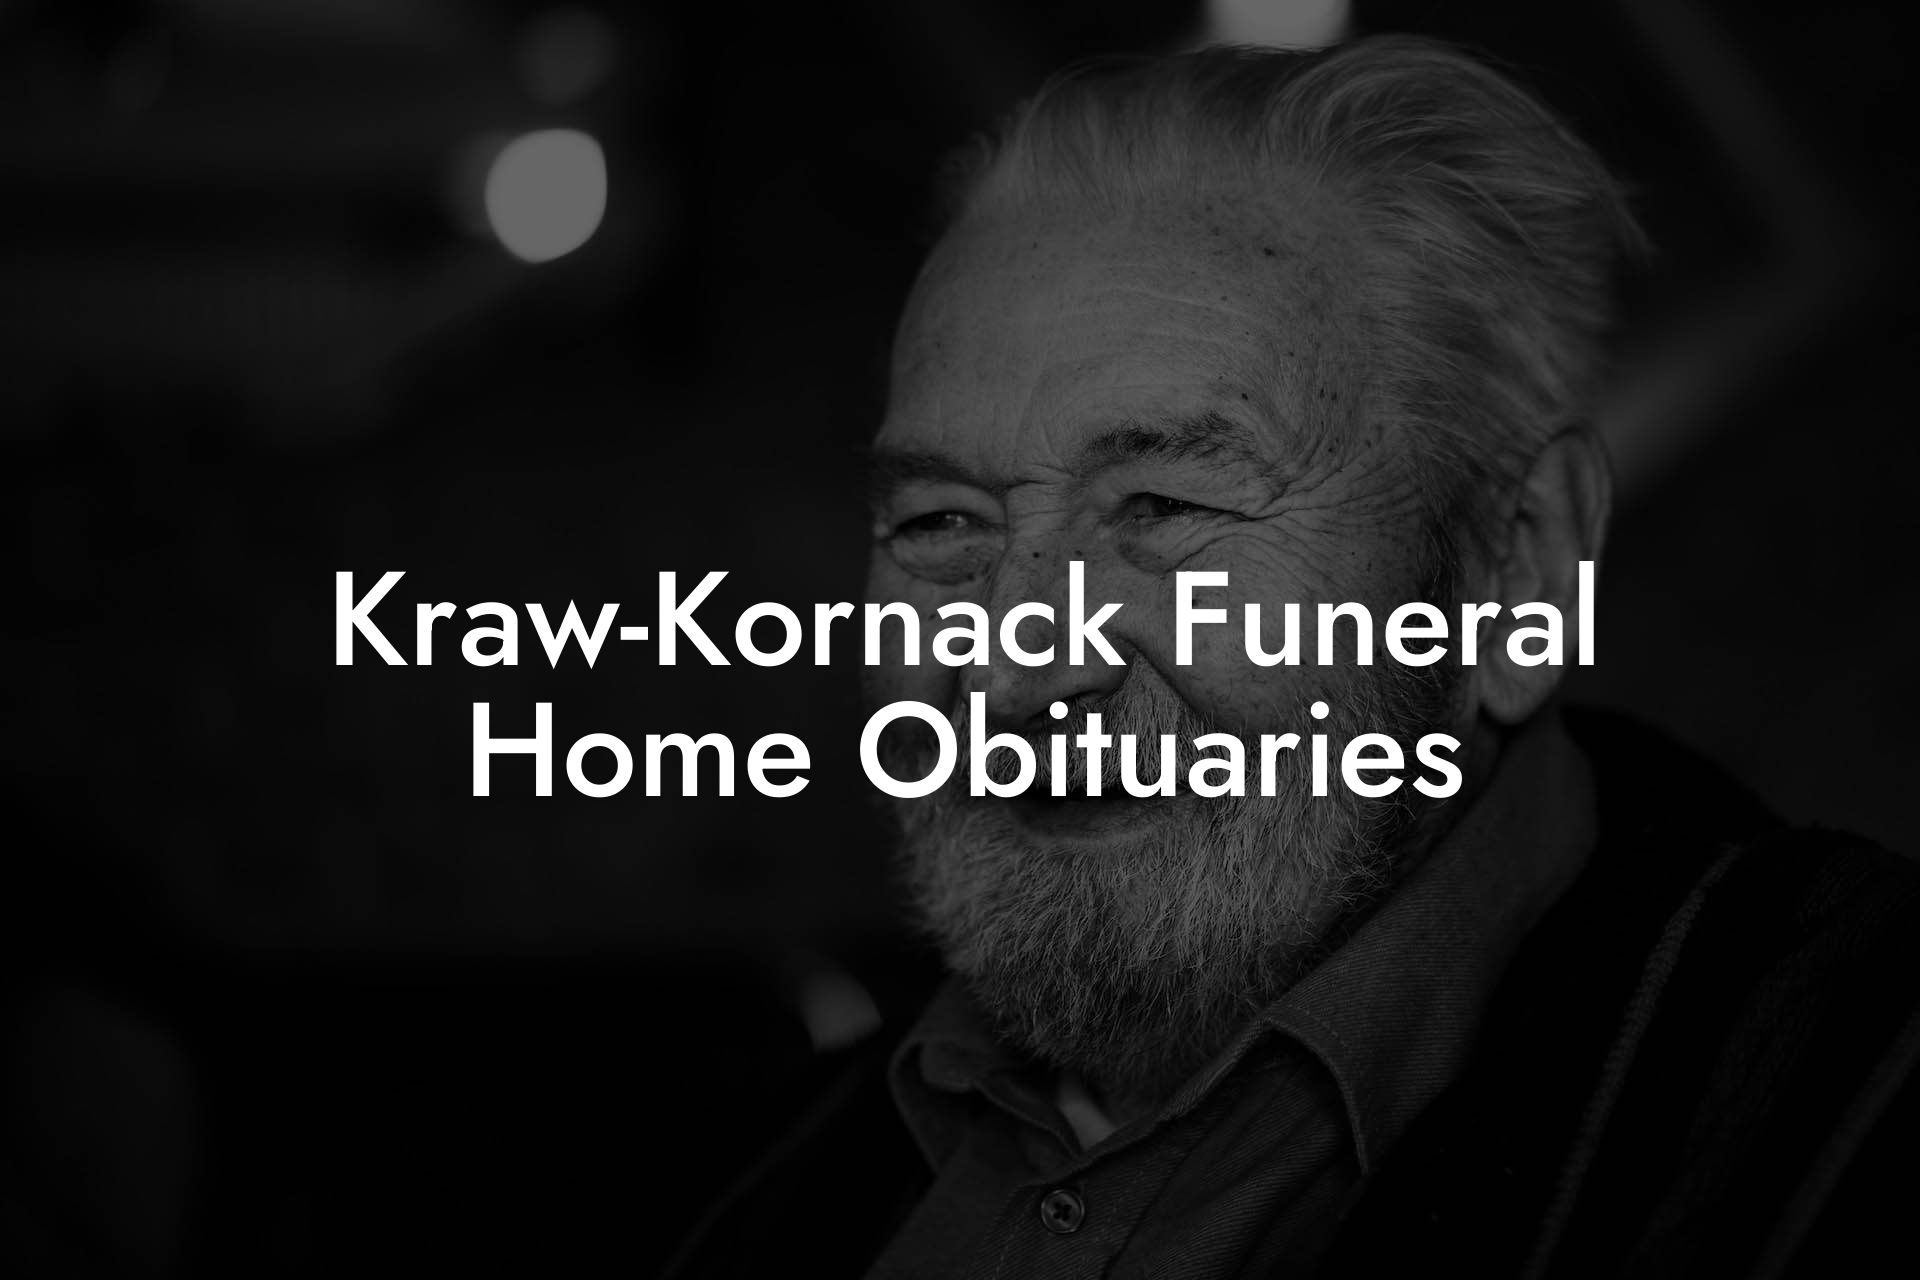 Kraw-Kornack Funeral Home Obituaries